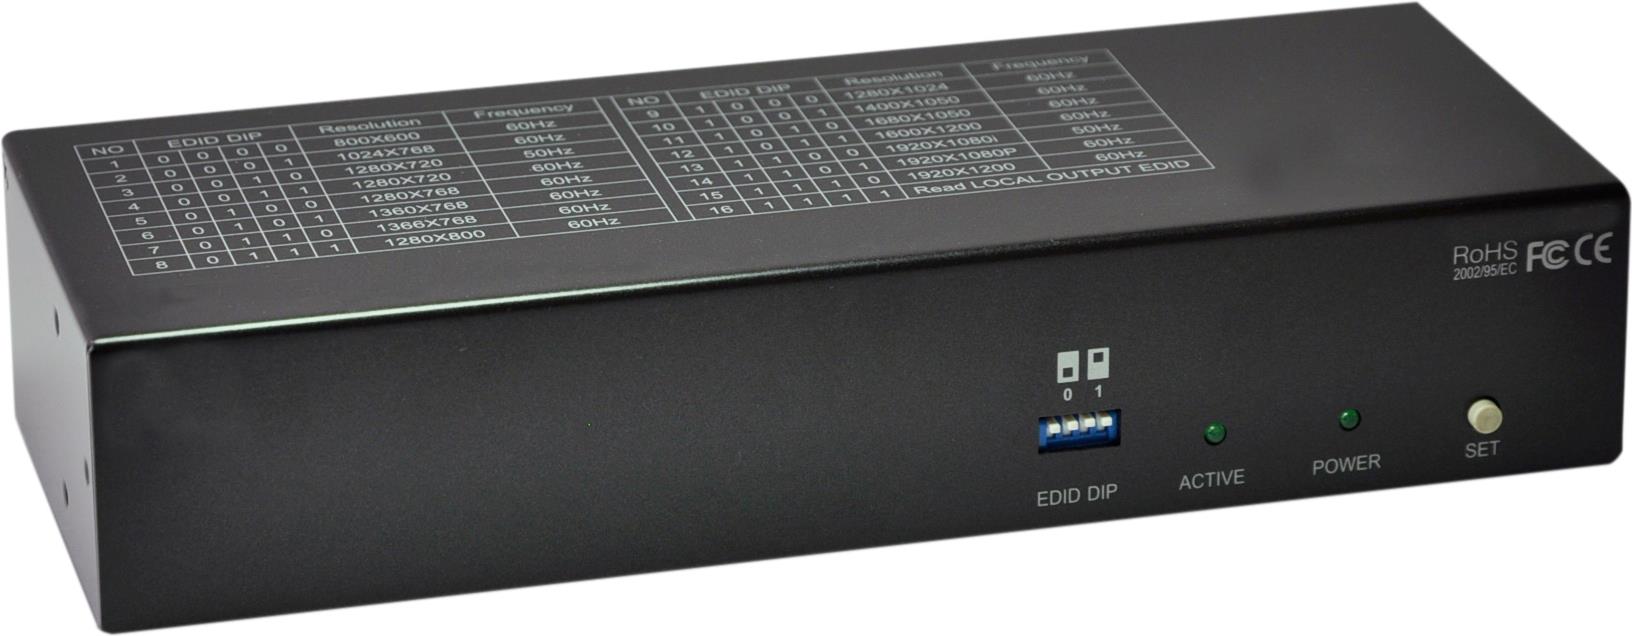 LevelOne HVE-9118T HDMI over Cat.5 Transmitter - Erweiterung f�r Video/Audio - transmitter - 10Mb LAN - �ber CAT 5 - bis zu 300 m von LevelOne